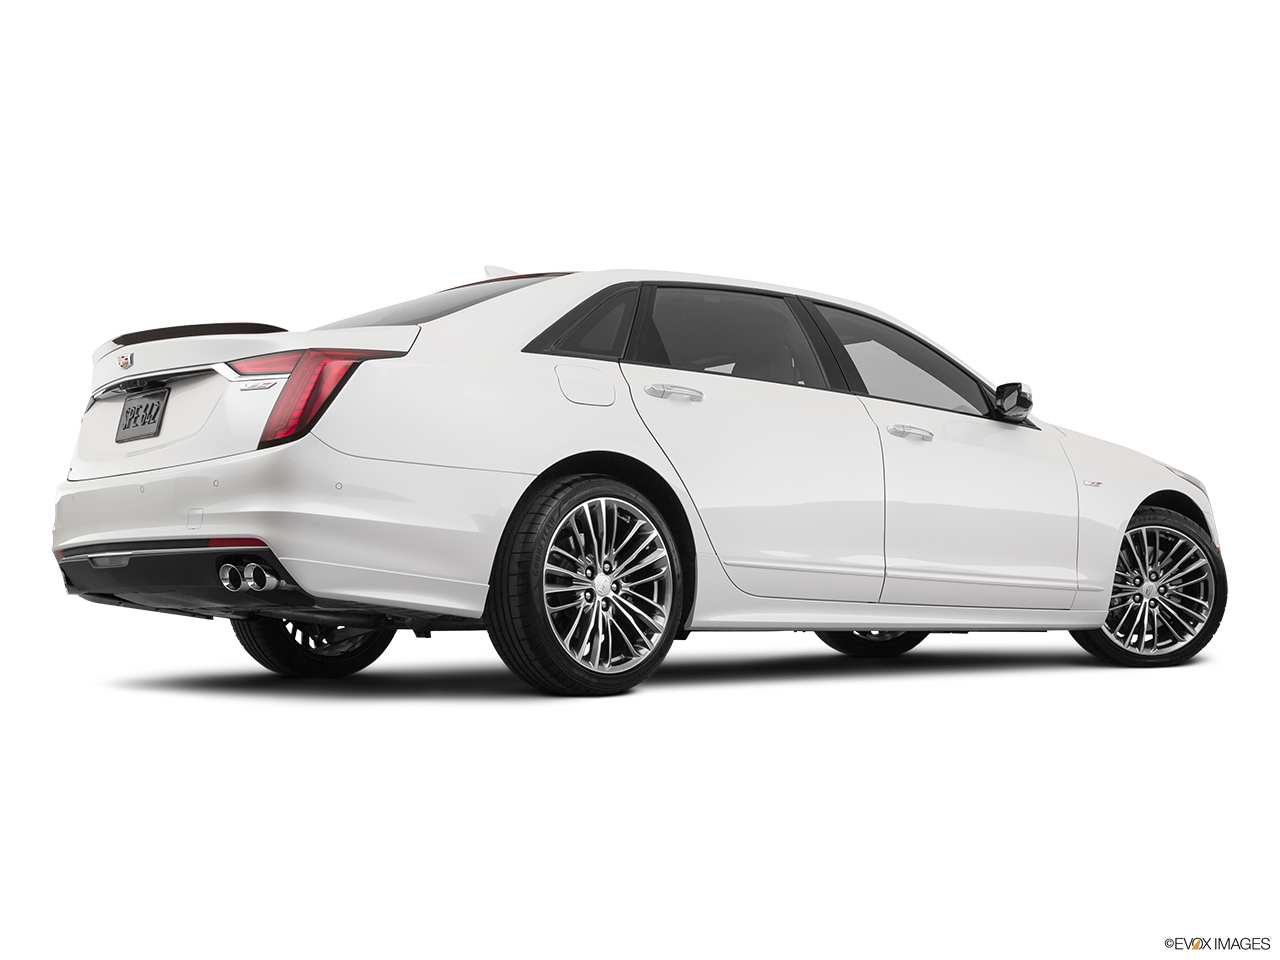 2019 Cadillac CT6-V Base Low/wide rear 5/8. 